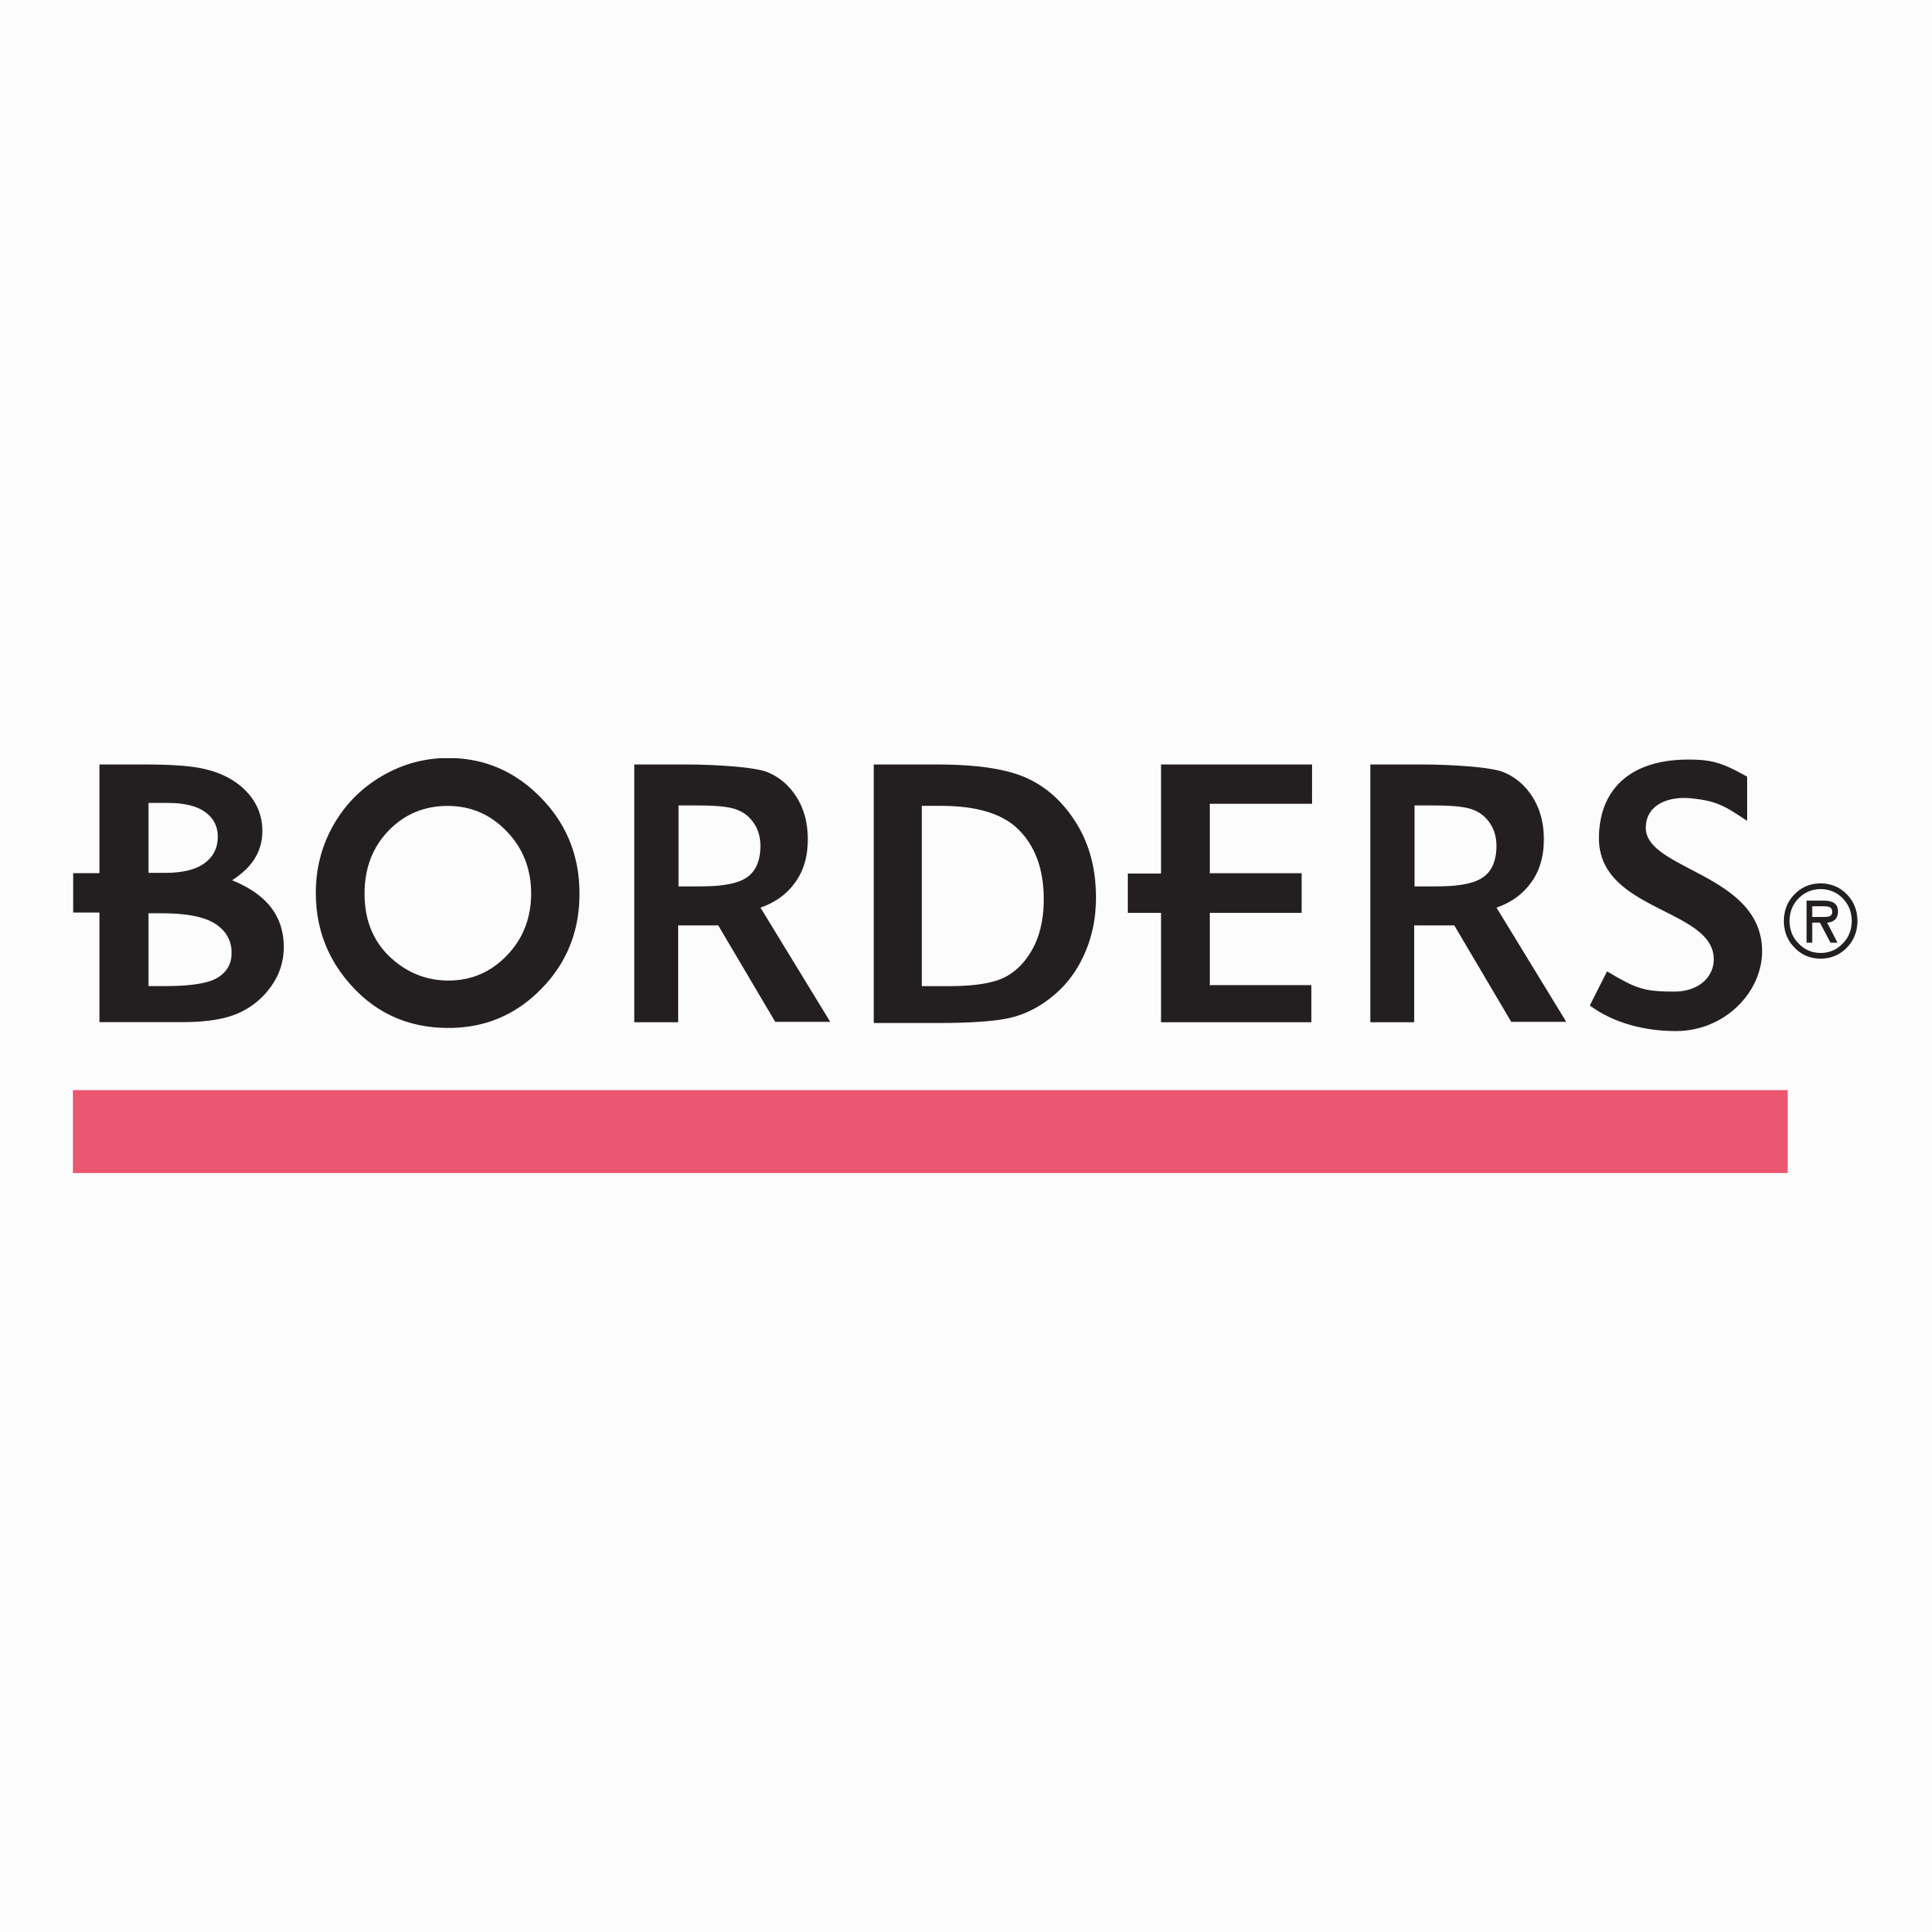 Borders retailer logo